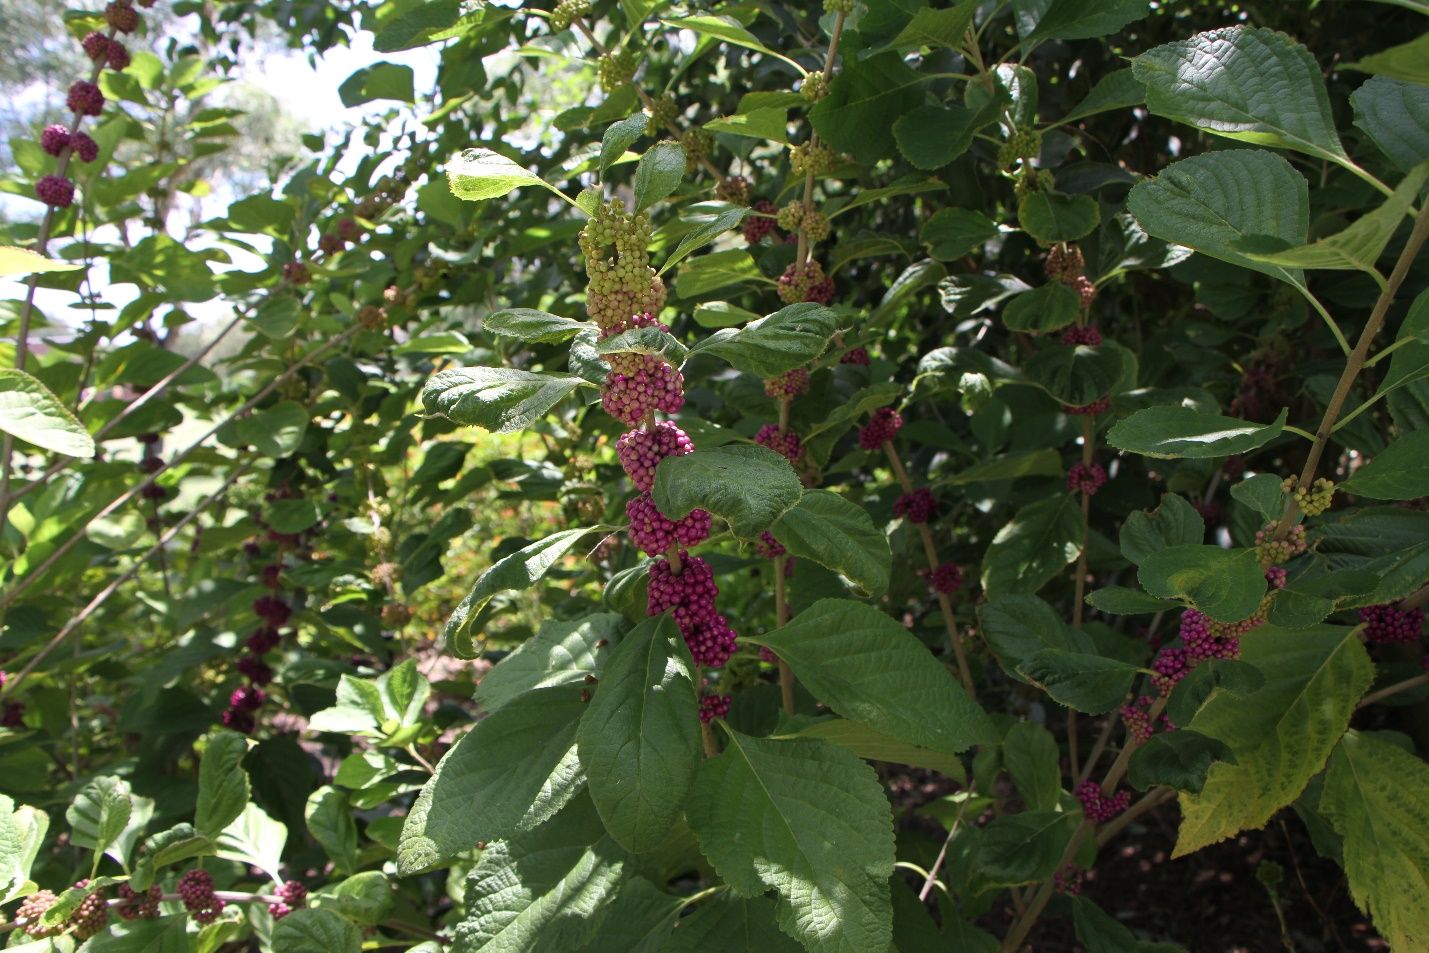 American beauty berry, Callicarpa americana, showcasing its beautiful purple berries. 